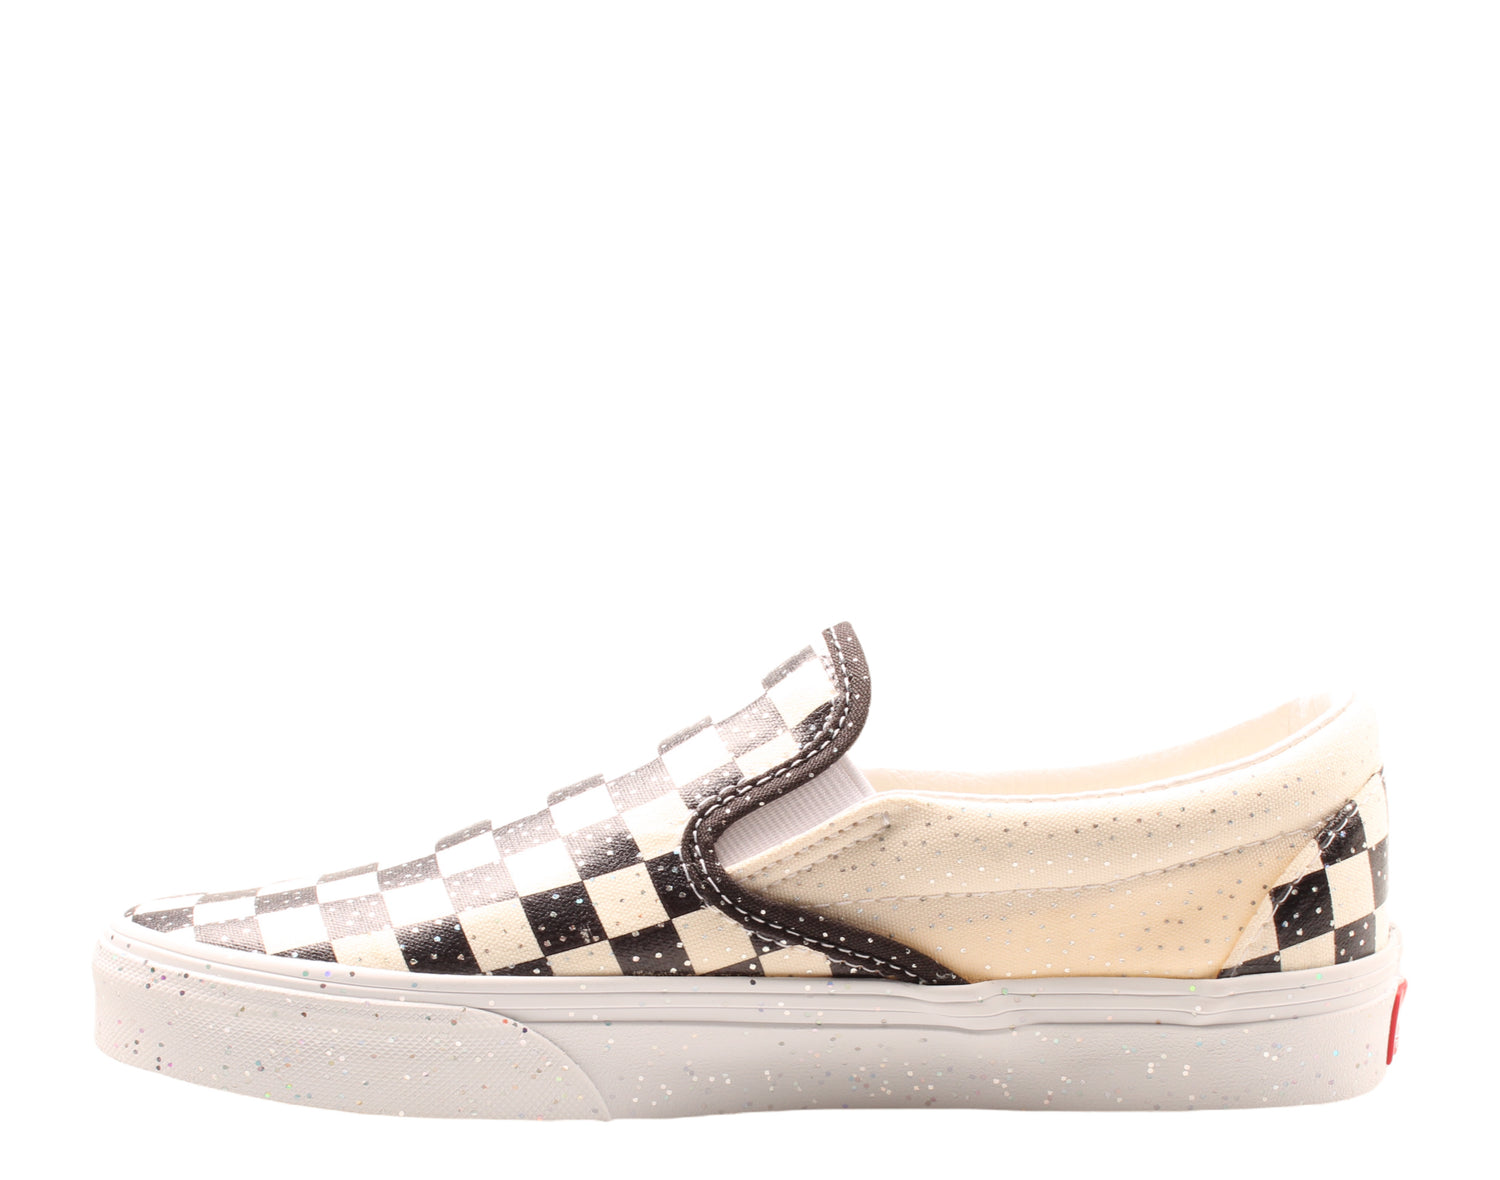 Vans Classic Slip-On Checkerboard Low Top Sneakers